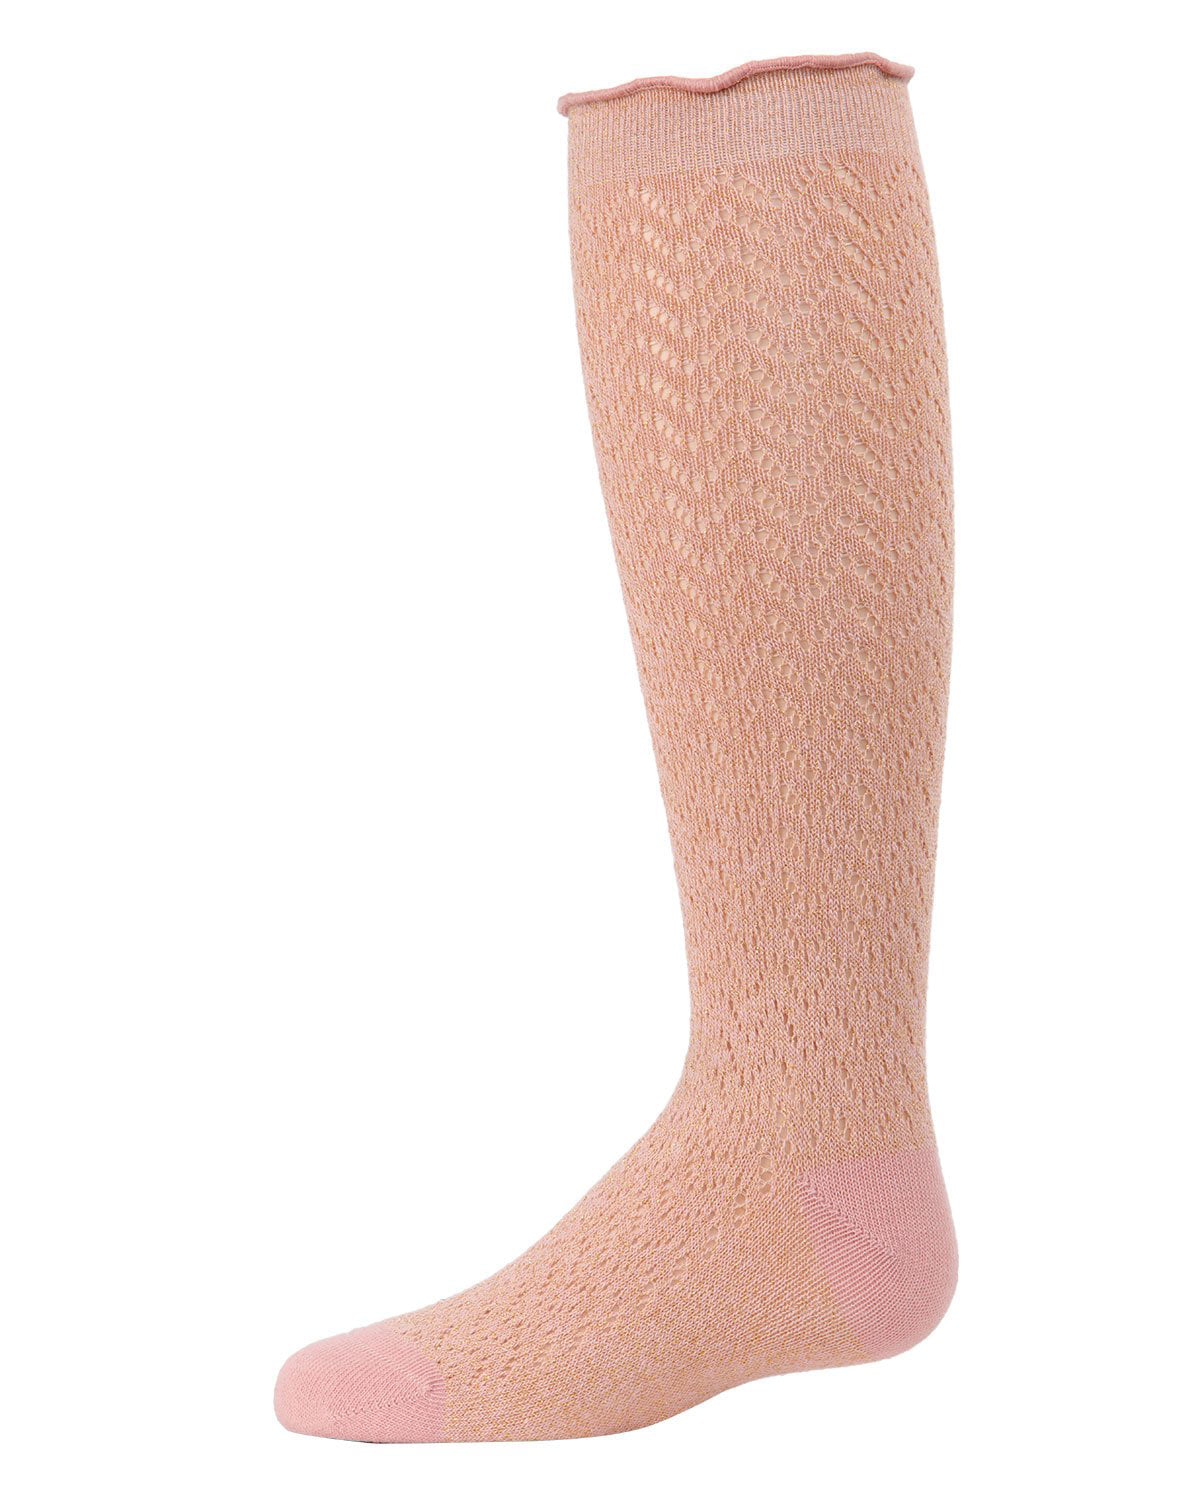 Unisex Novelty Printed Soft Knee High Socks Wotercolor Fluorescent Sea Turtle Crew Socks 